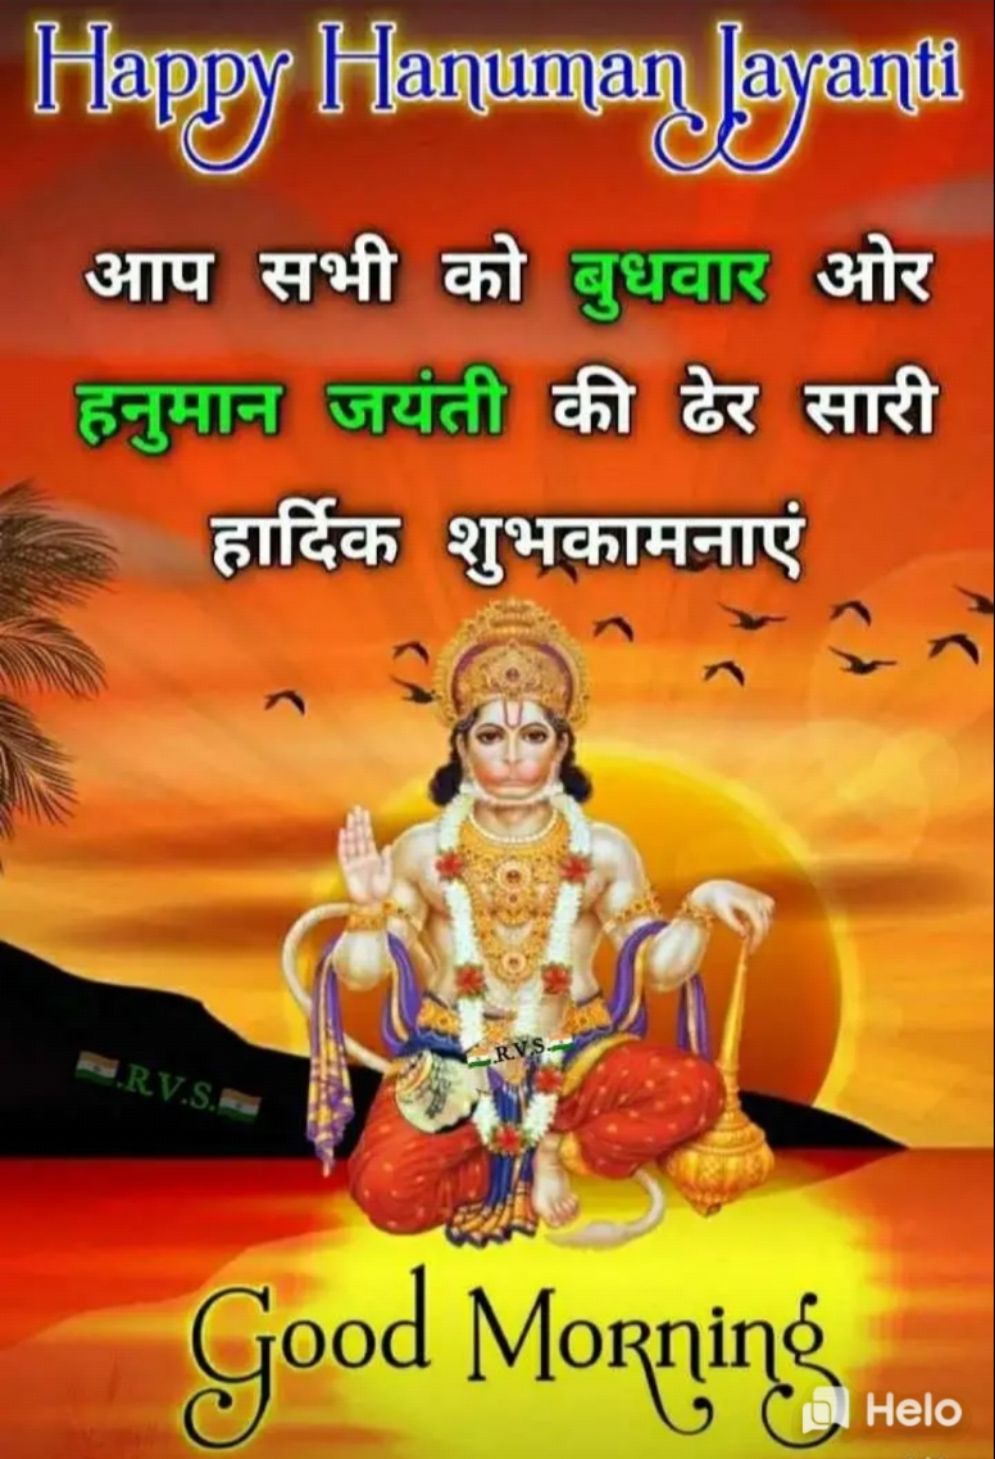 happy hanuman jayanti • ShareChat Photos and Videos